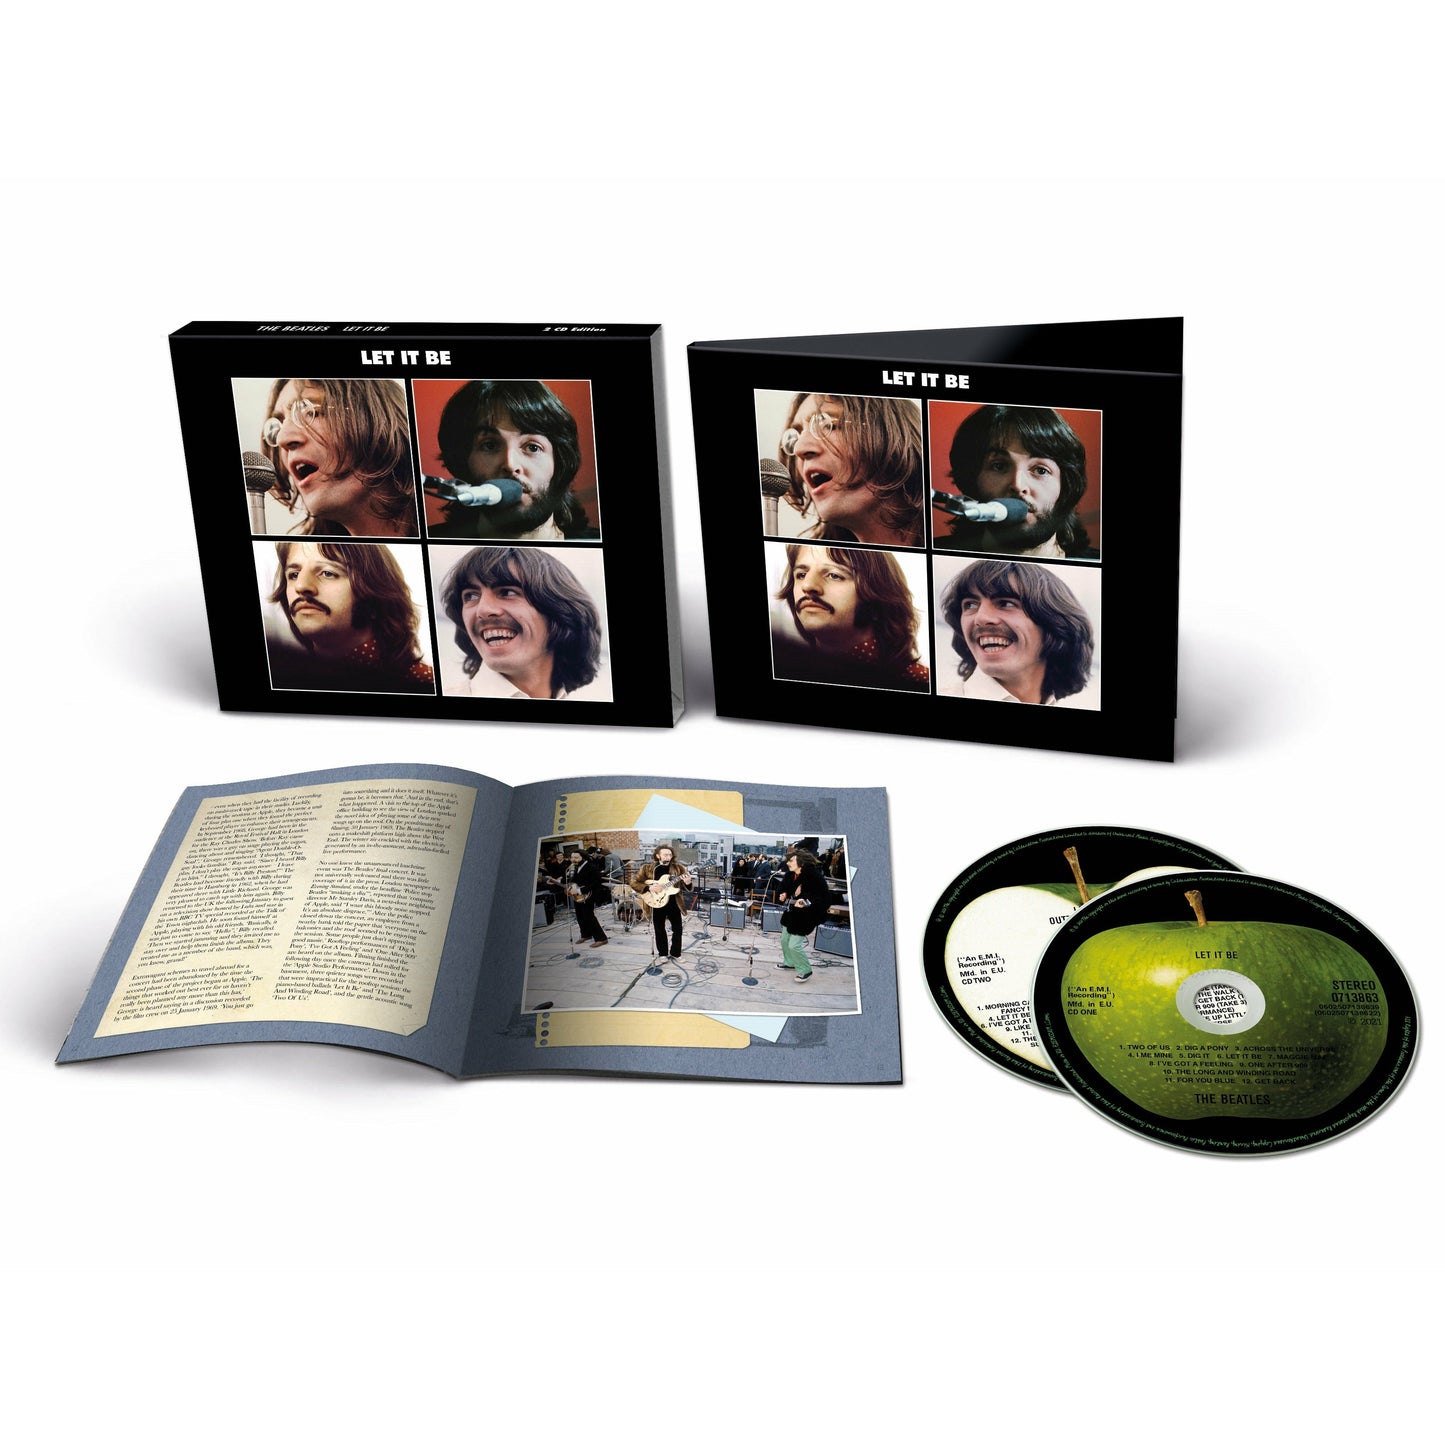 Die Beatles – Let It Be Special Edition